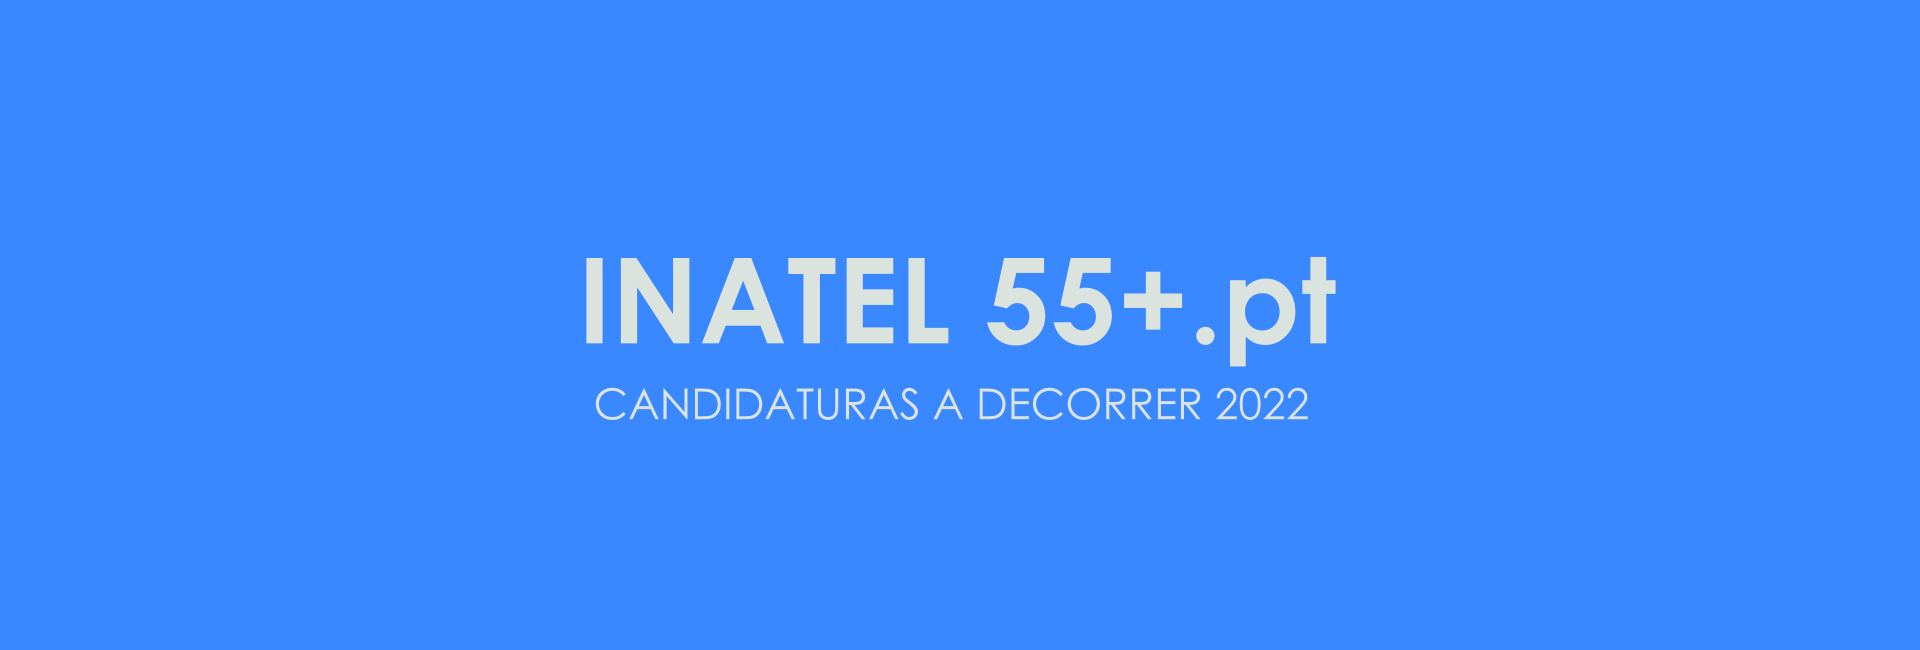 (Português) INATEL 55+.pt 2022 – Candidaturas a Decorrer